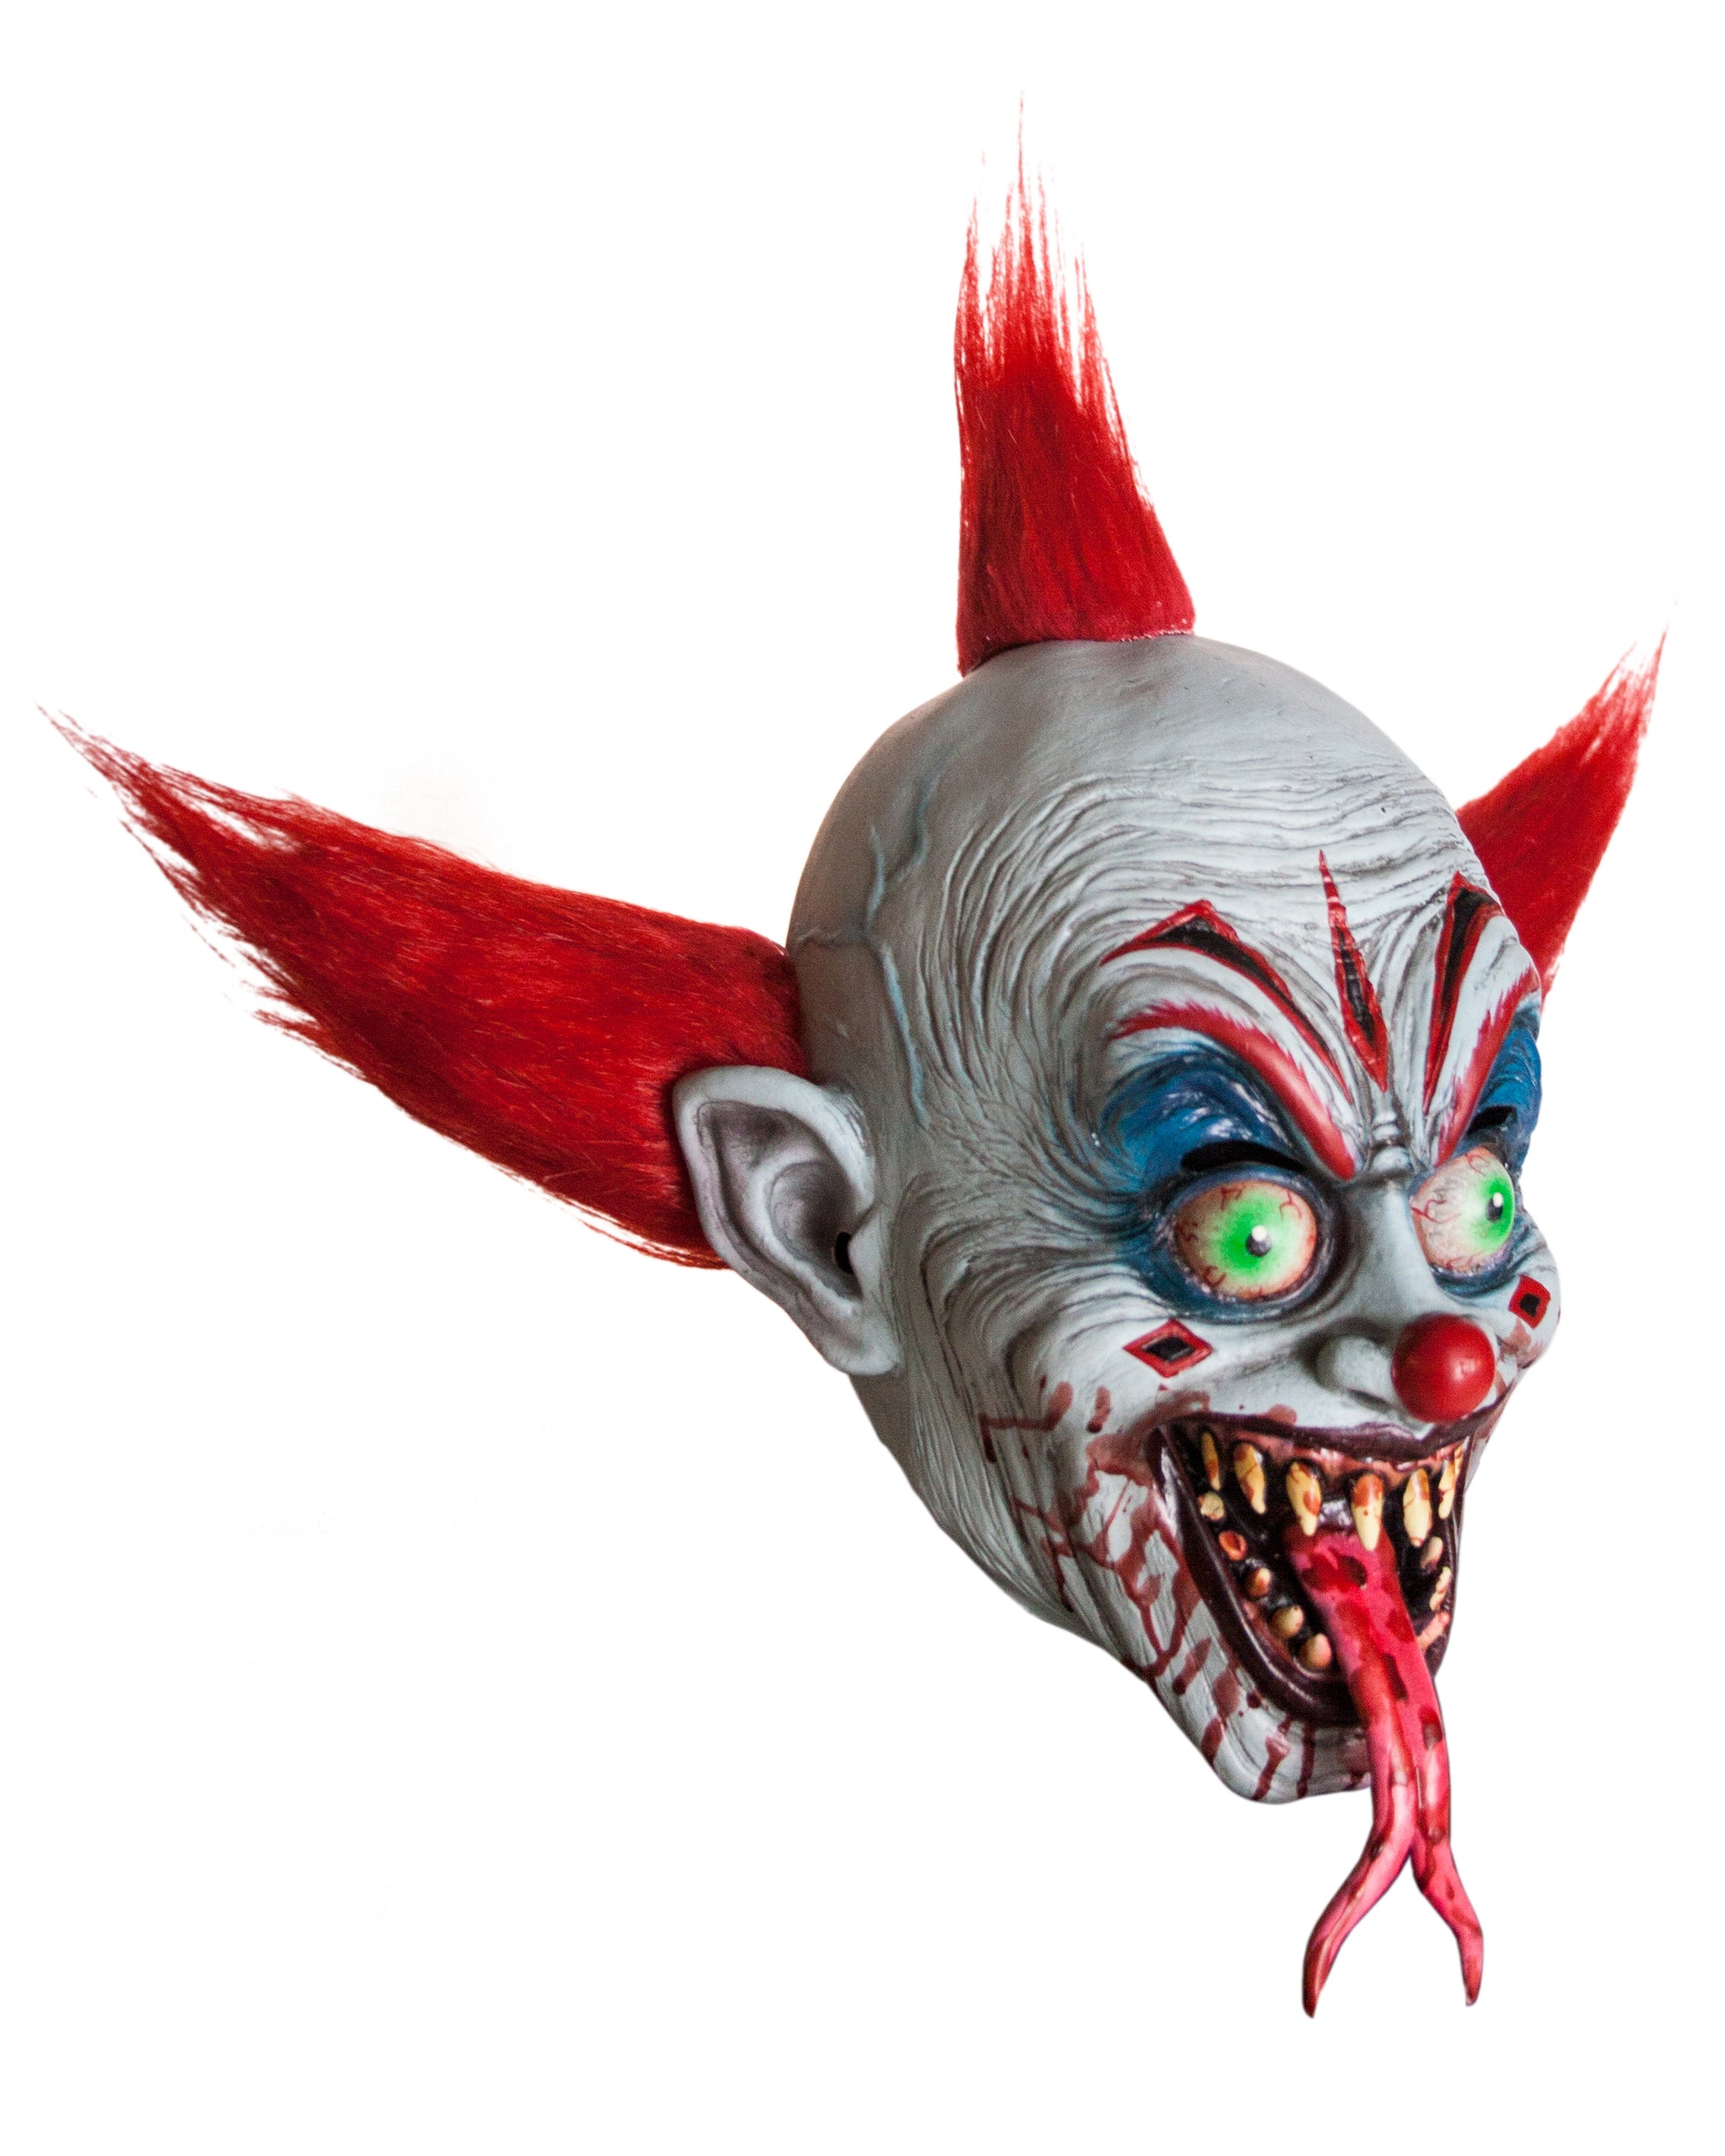 Skeezy the Killer Clown | Professional Halloween Scary Clown Mask